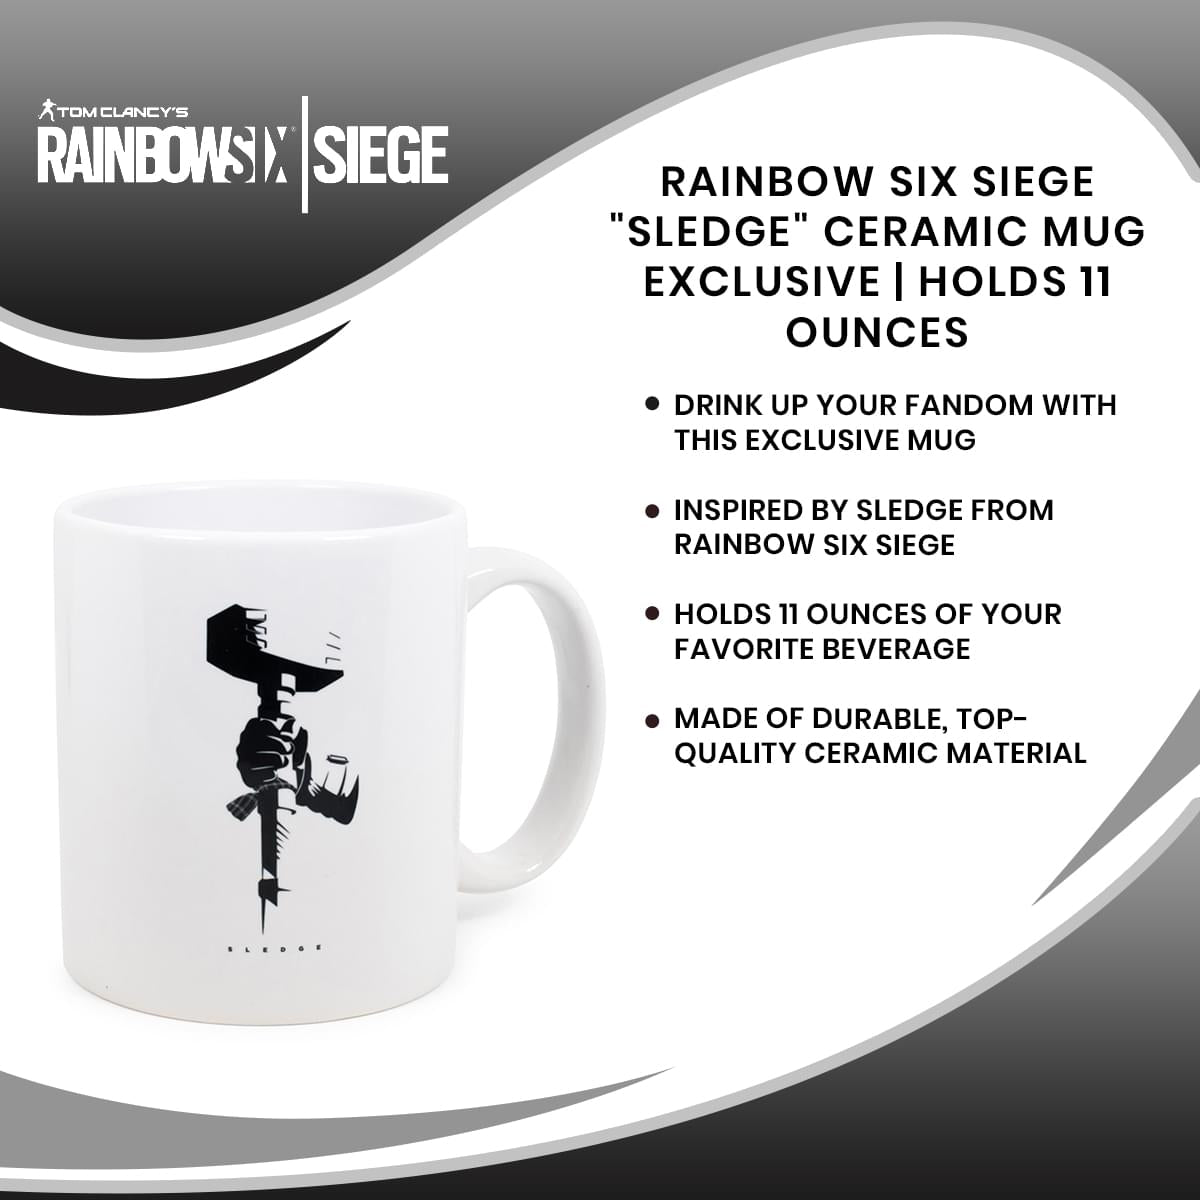 Rainbow Six Siege "Sledge" Ceramic Mug Exclusive | Holds 11 Ounces